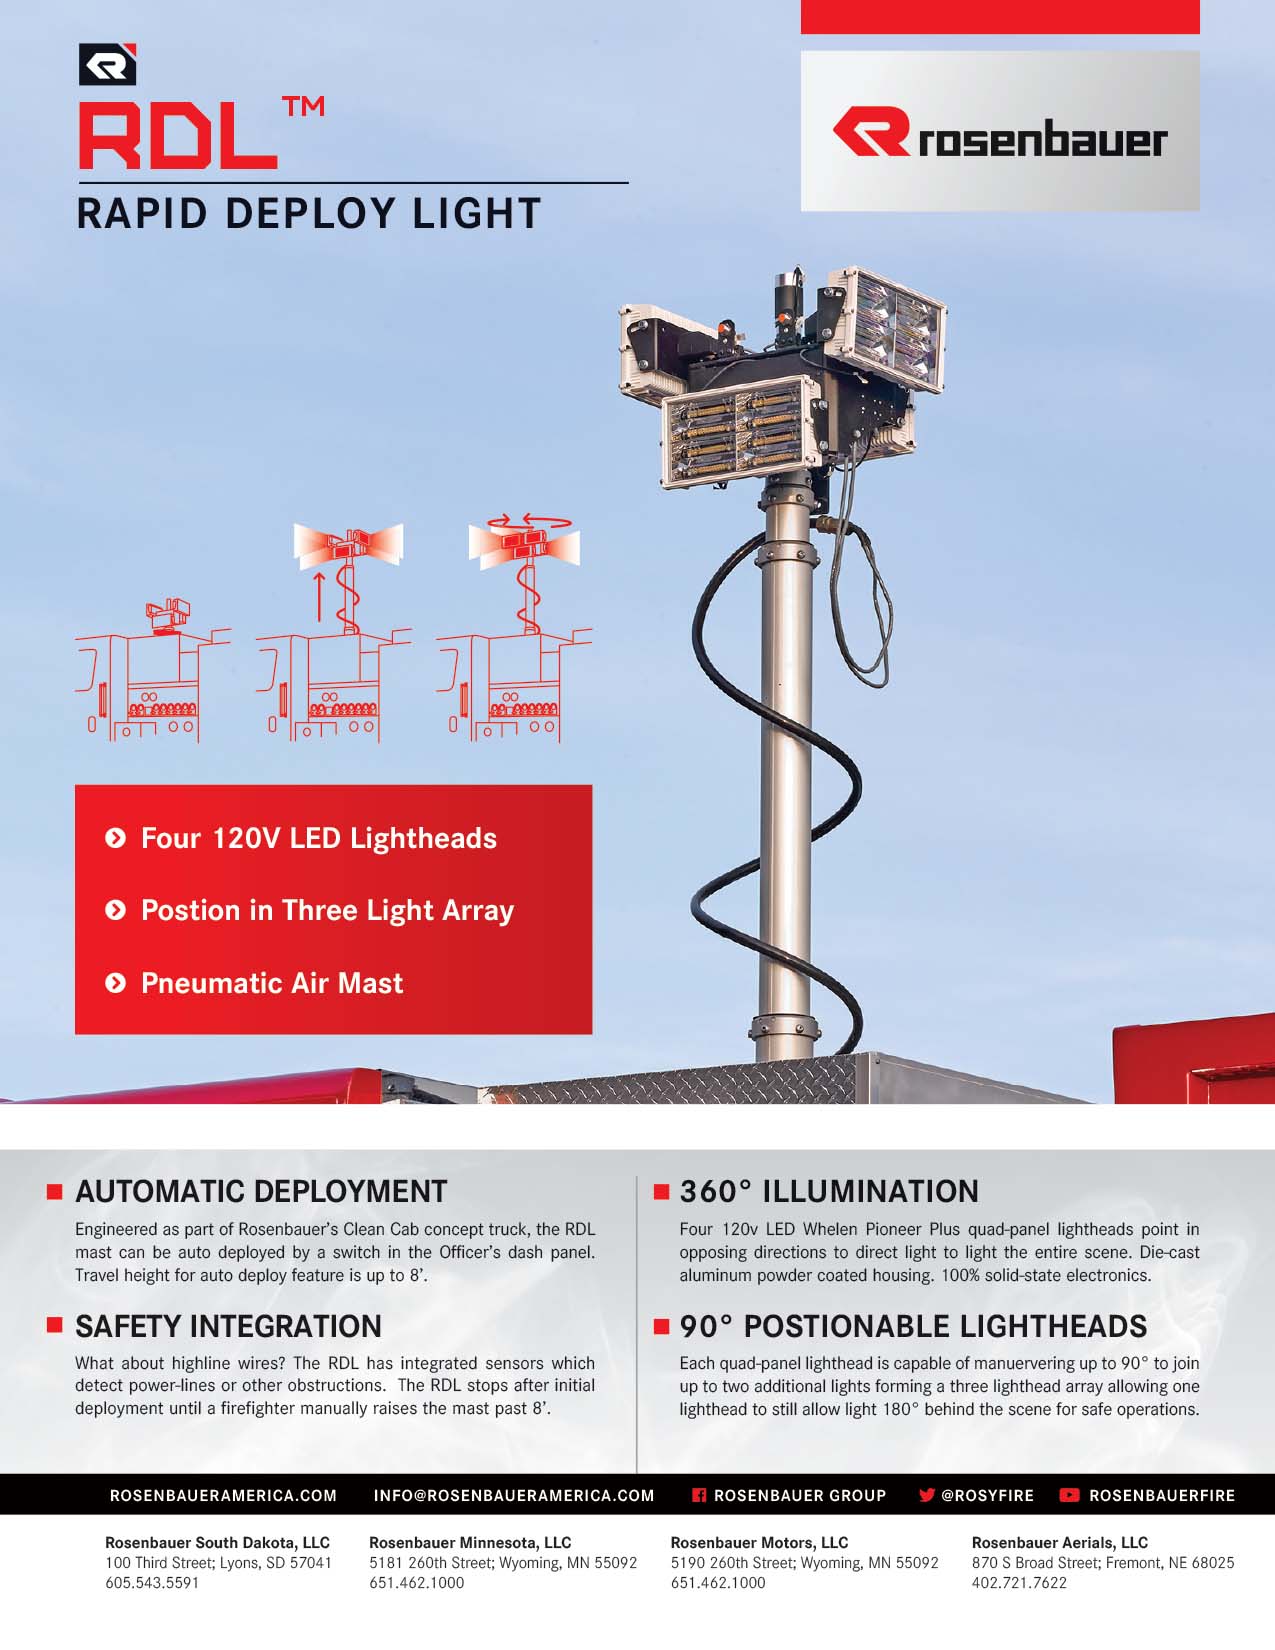 Rapid Deploy Light (RDL)